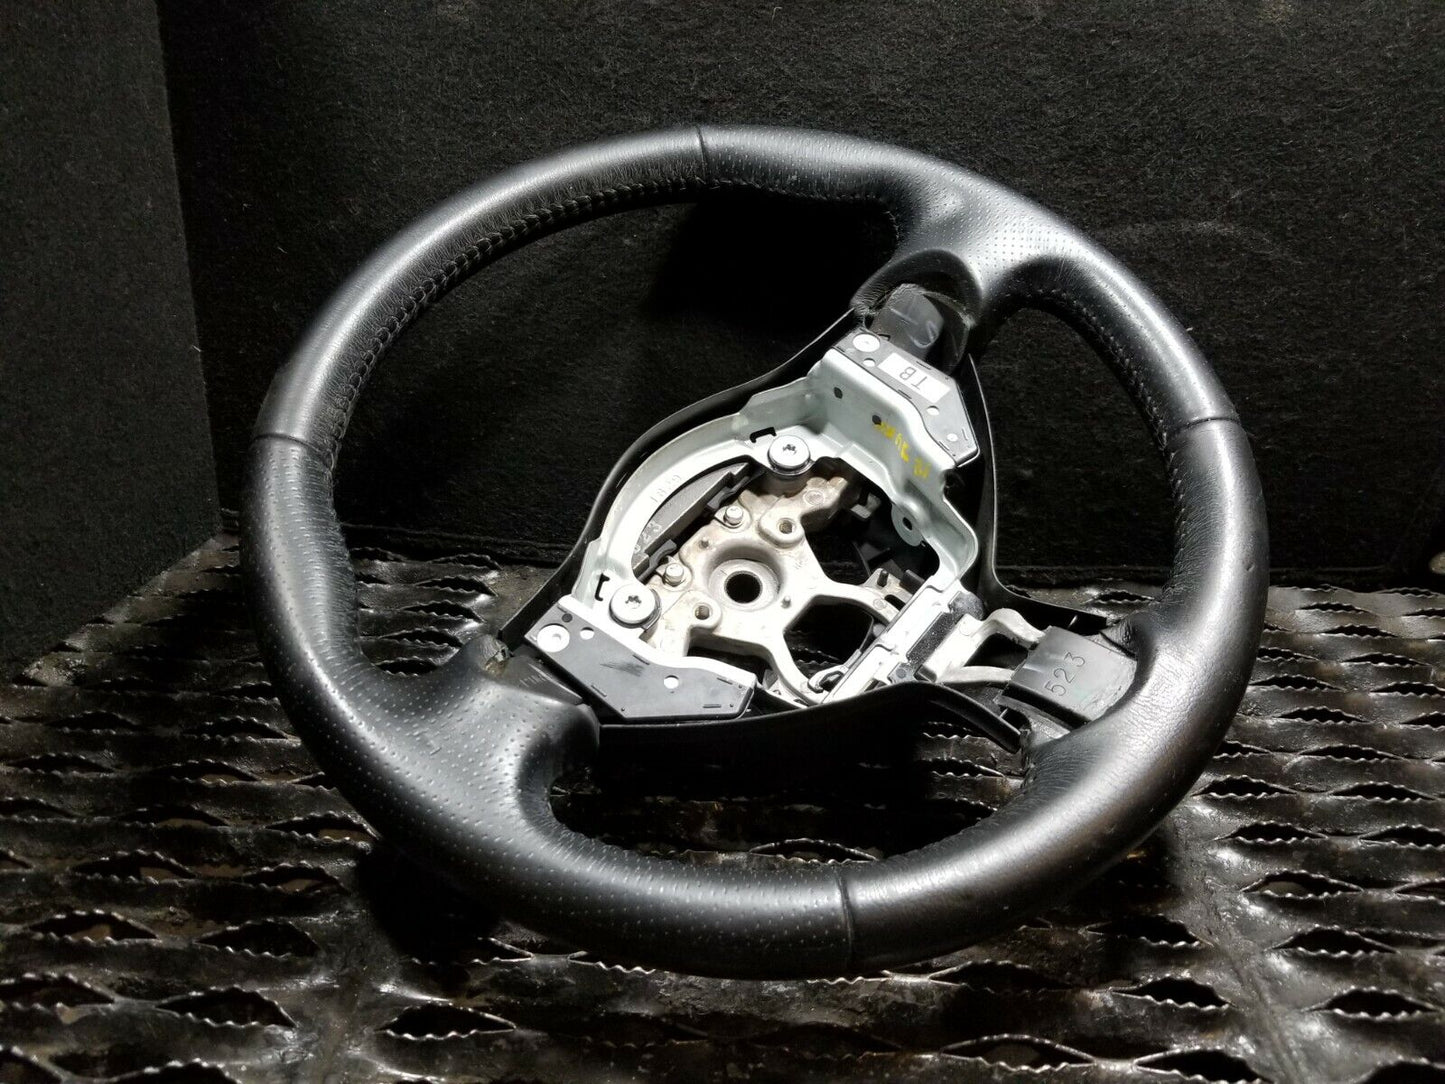 11 12 13 14 Nissan Juke Steering Wheel Black Leather OEM